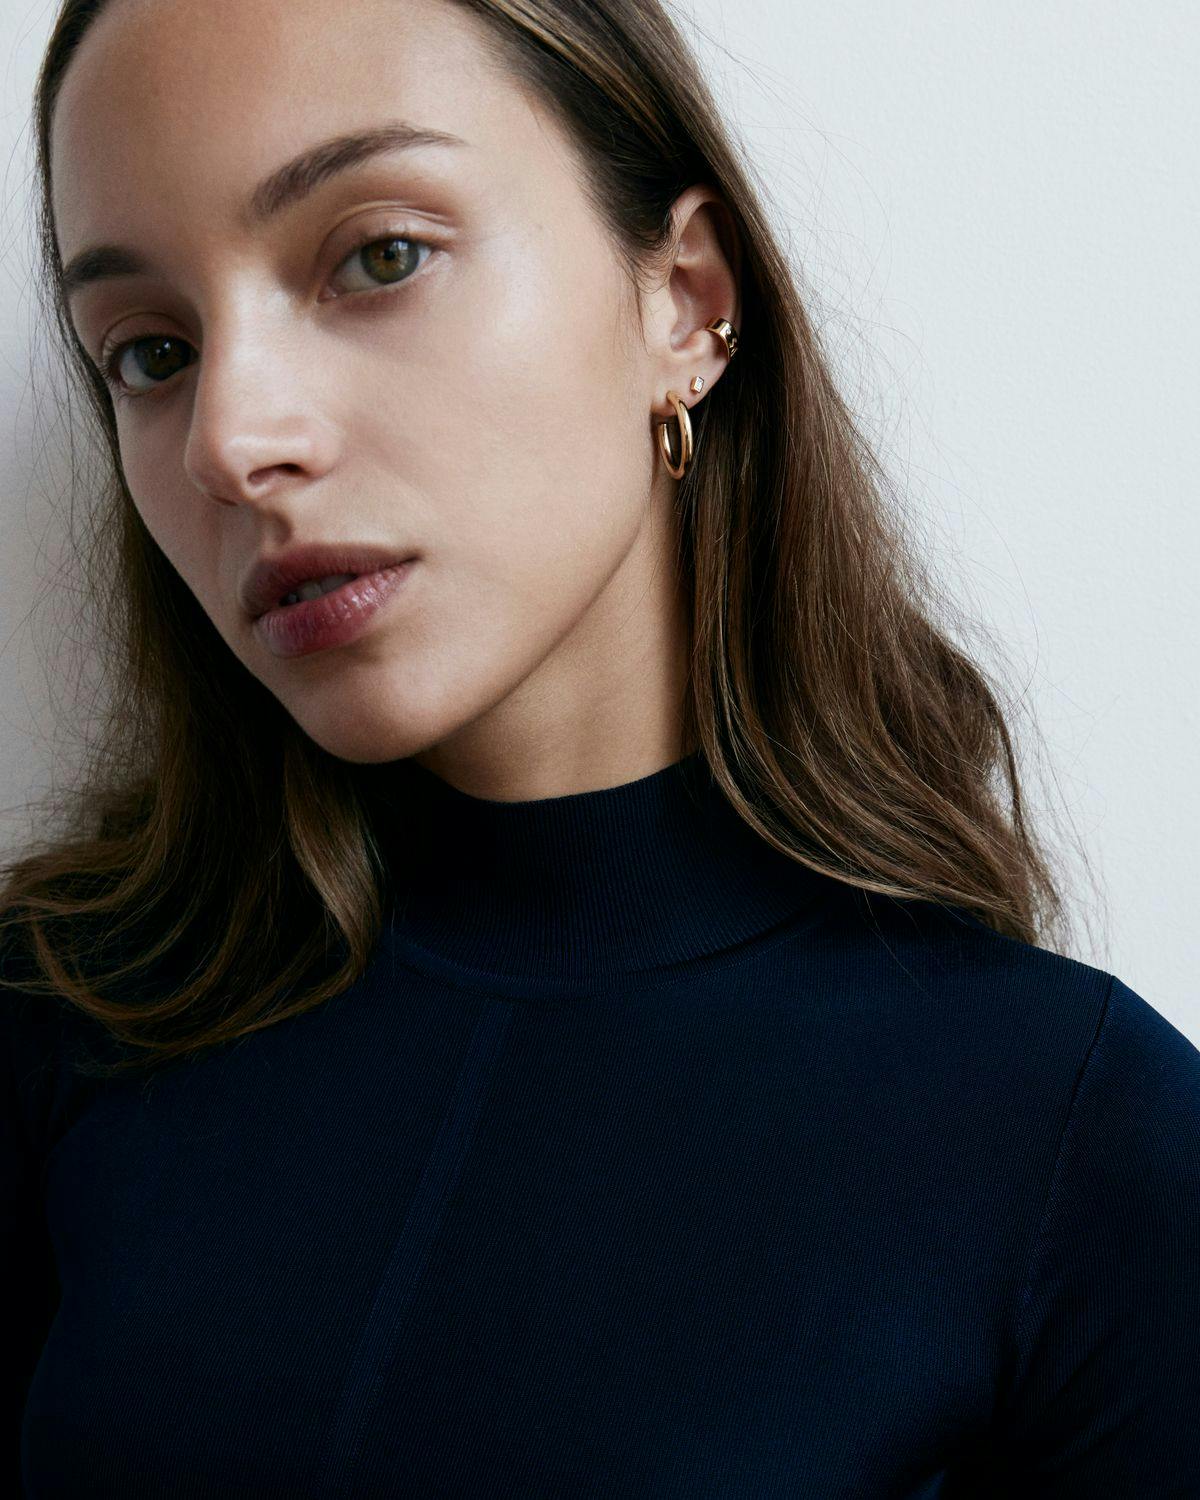 Model wearing high collar turtleneck and diamond earrings. 